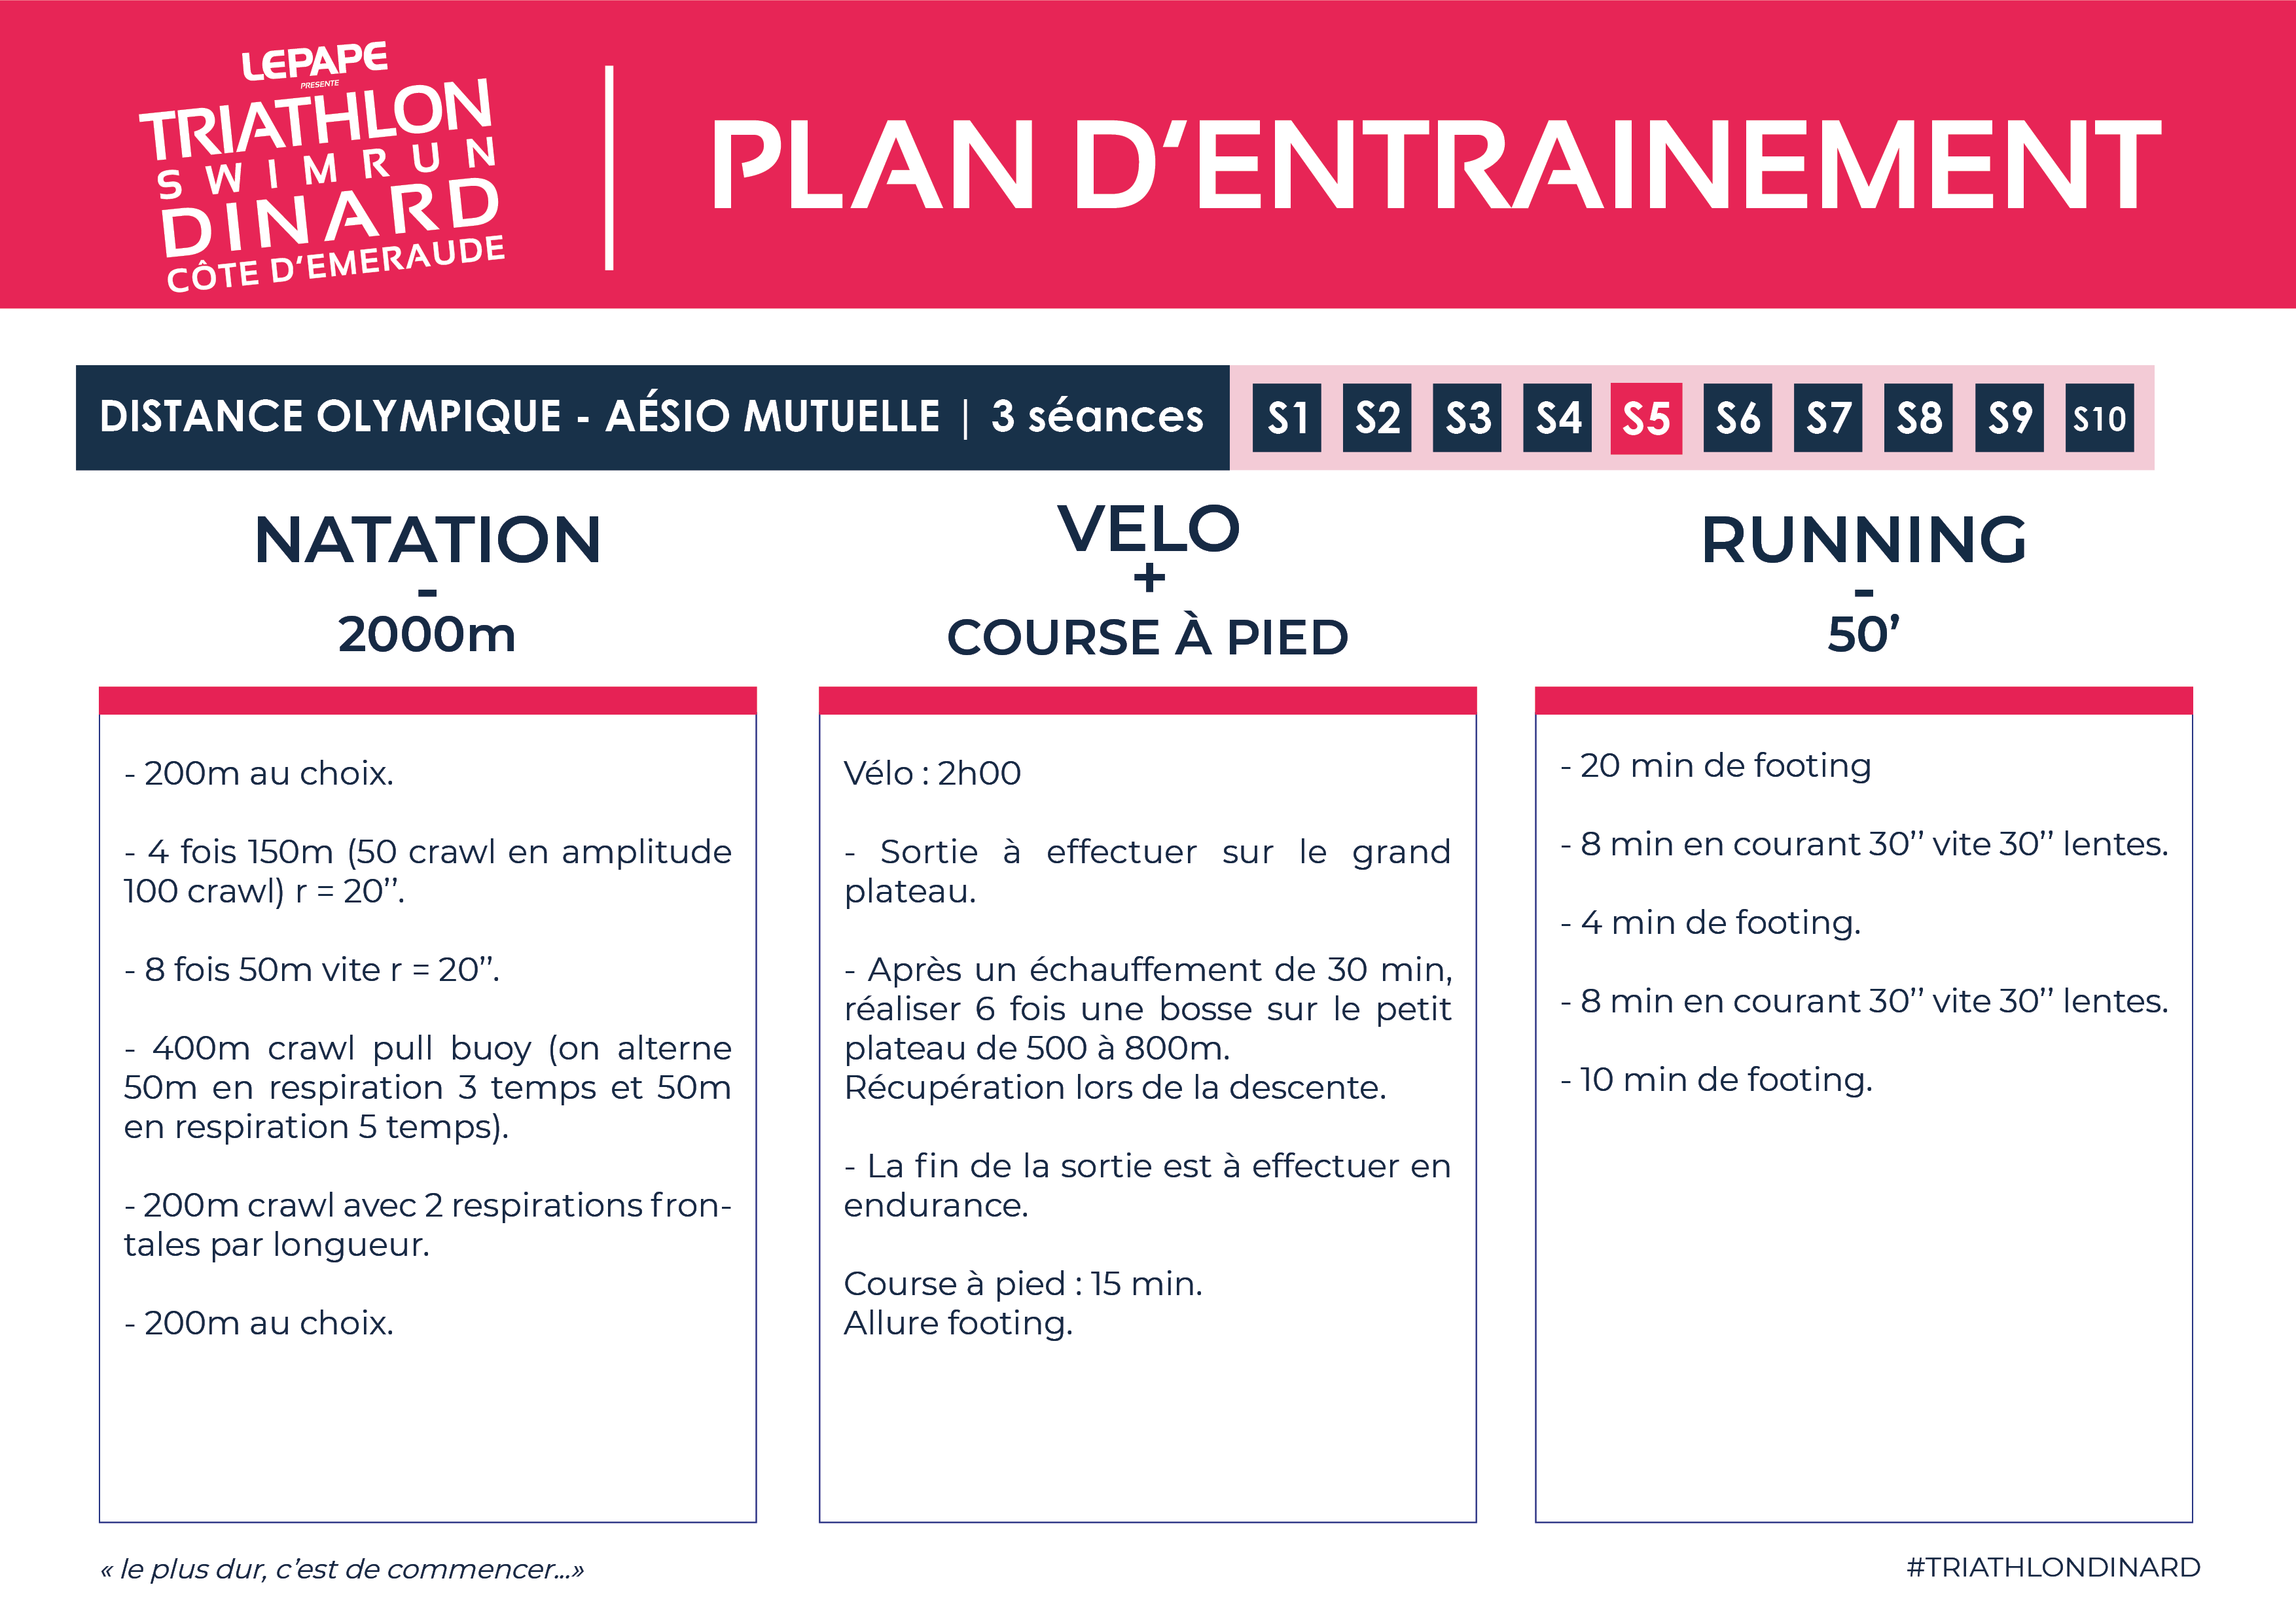 Plan d'entrainement Distance Olympique triathlon dinard côte d'emeraude